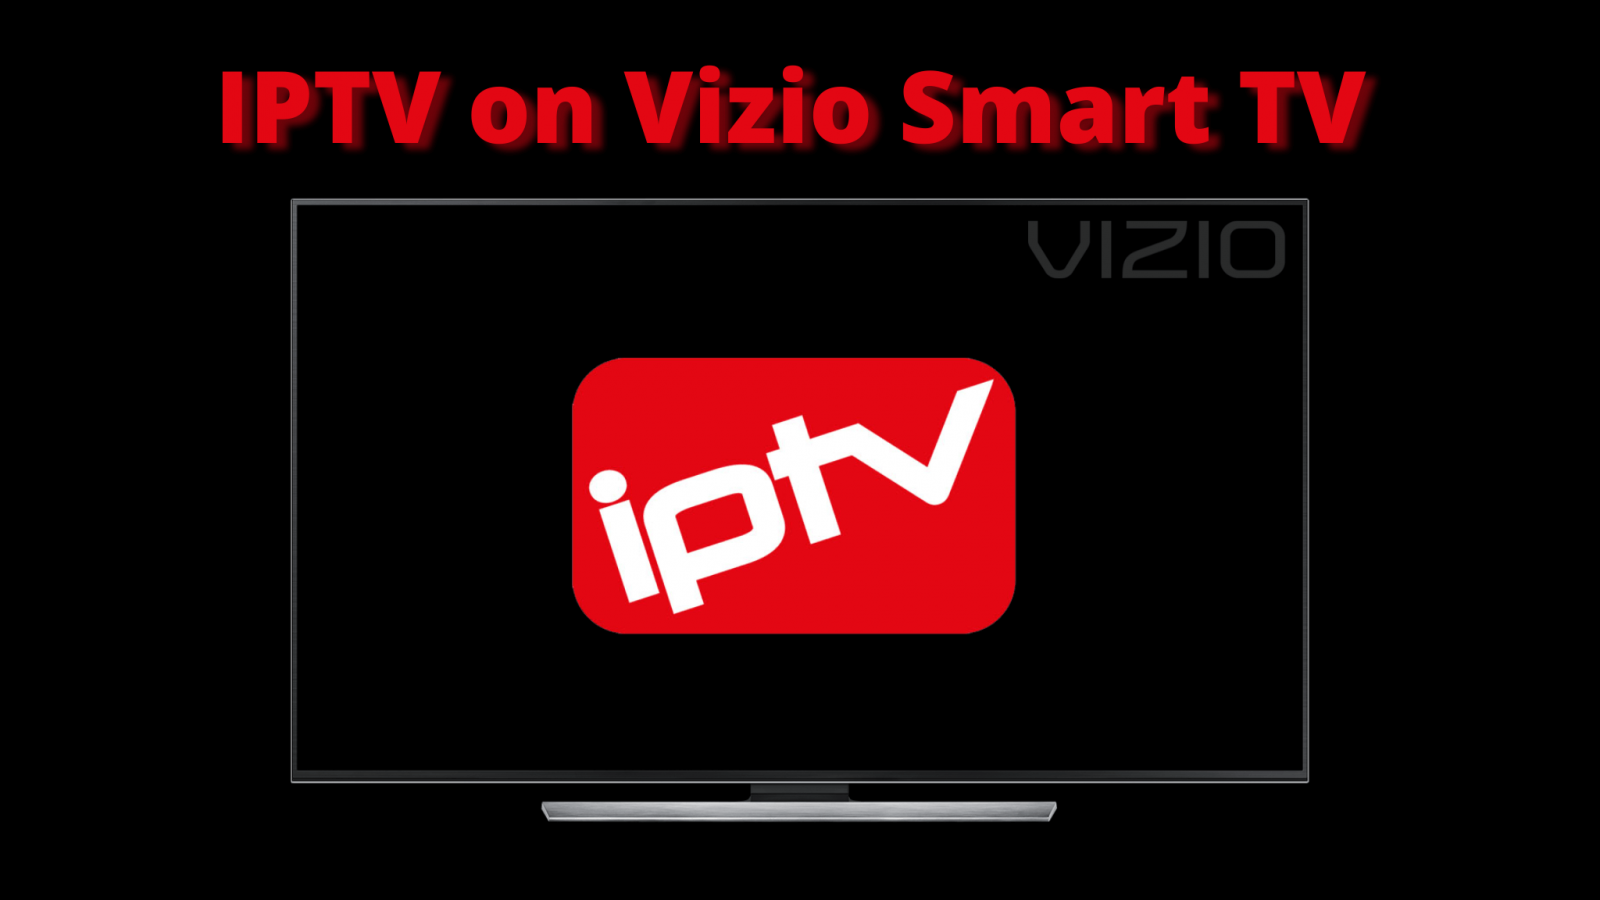 IPTV on Vizio TV